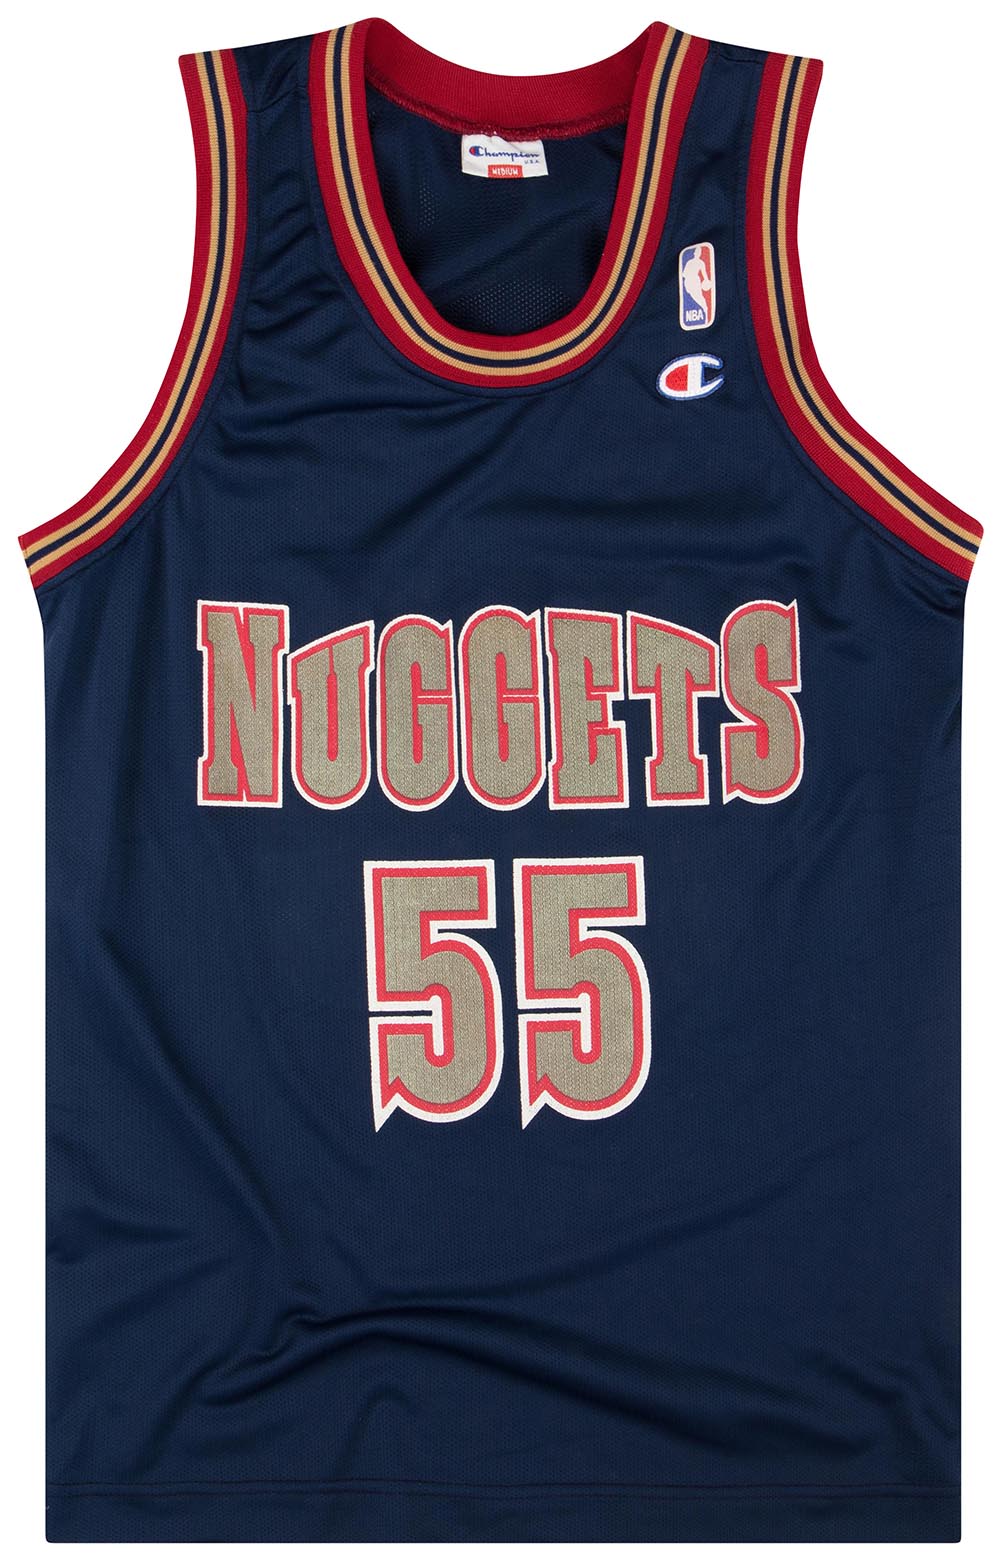 Denver Nuggets Jerseys, Nuggets Basketball Jerseys